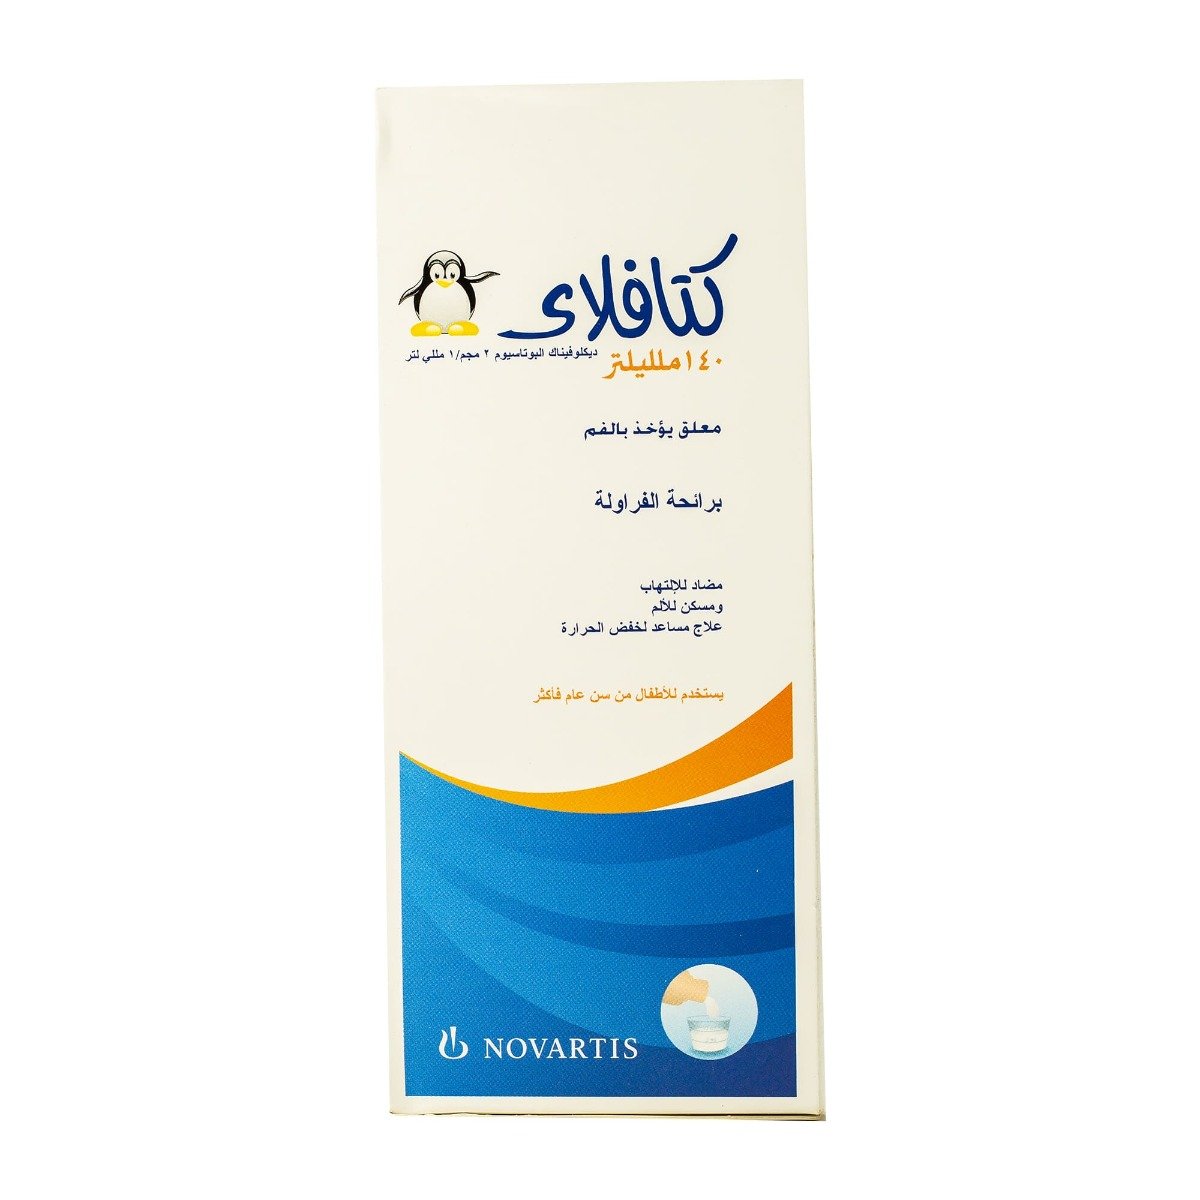 Catafly 2 mg-ml Suspension - 140 ml - Bloom Pharmacy